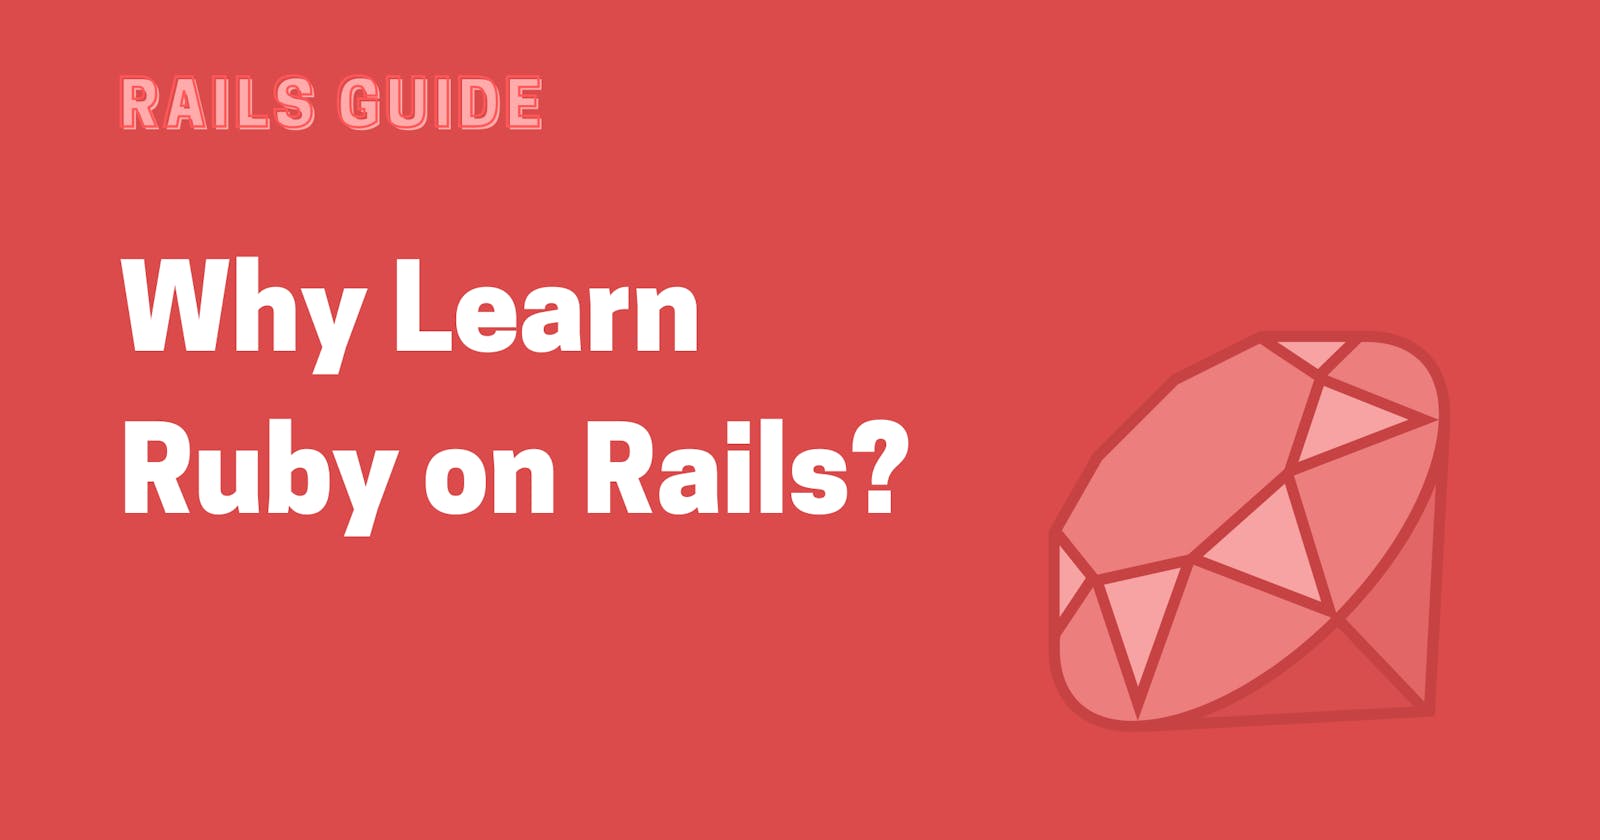 Why learn Ruby on Rails?